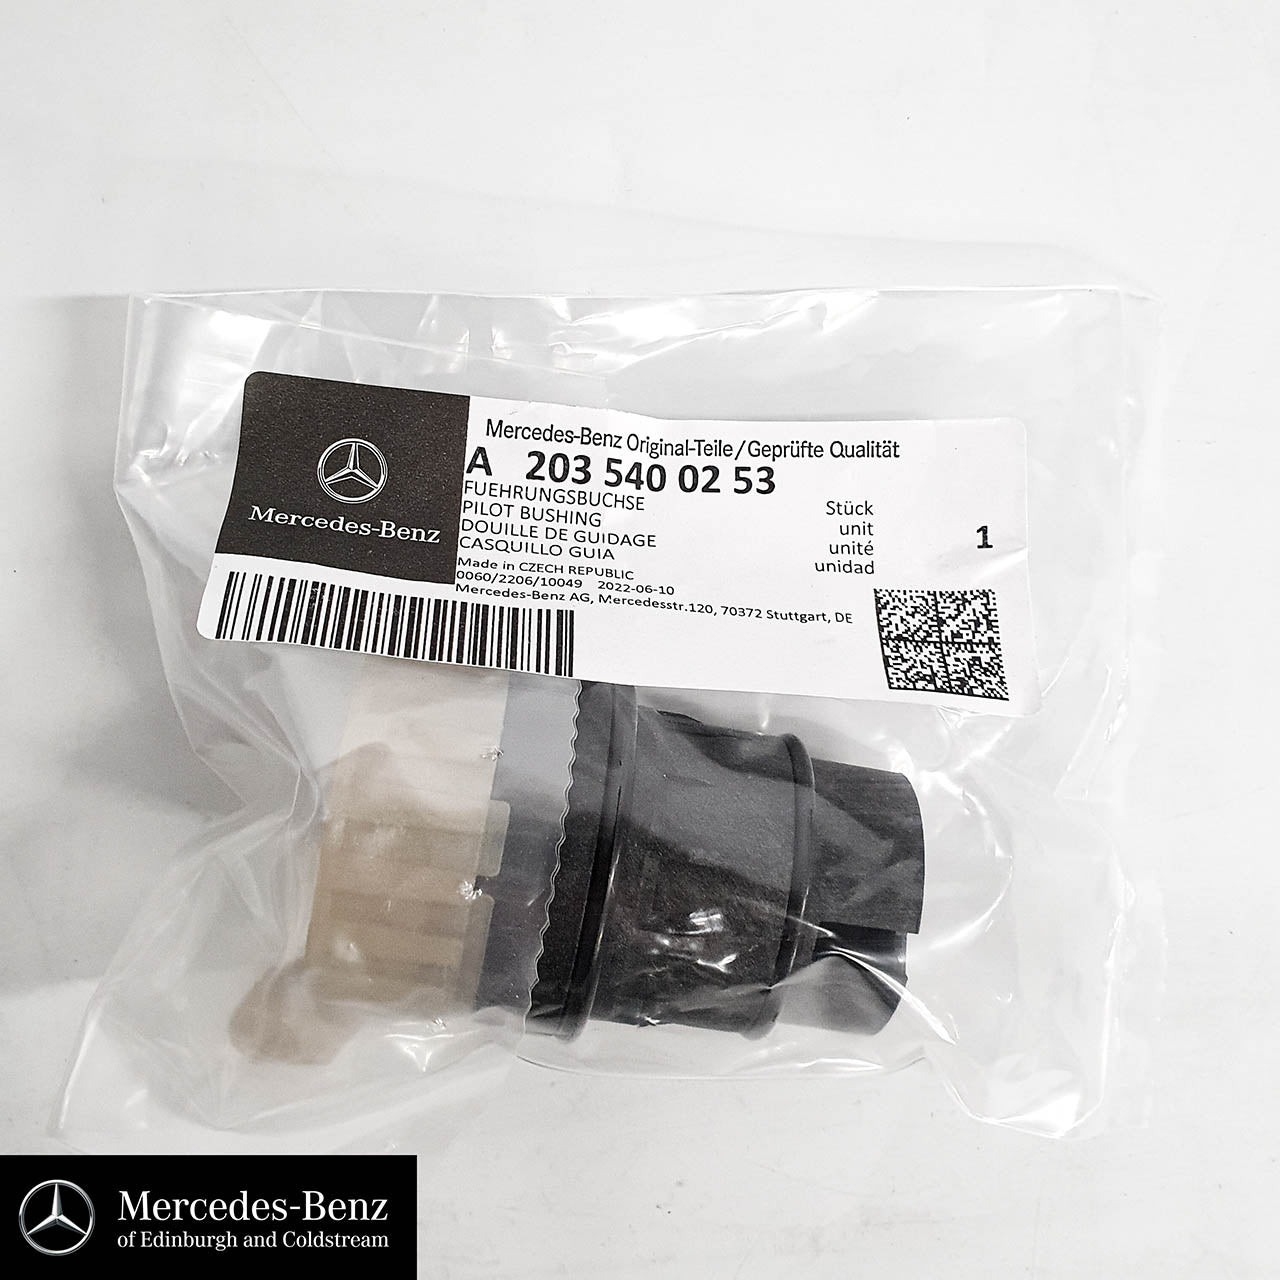 Genuine Mercedes-Benz 722.6 Automatic Gearbox Electrical Multi Plug - Pilot bushing